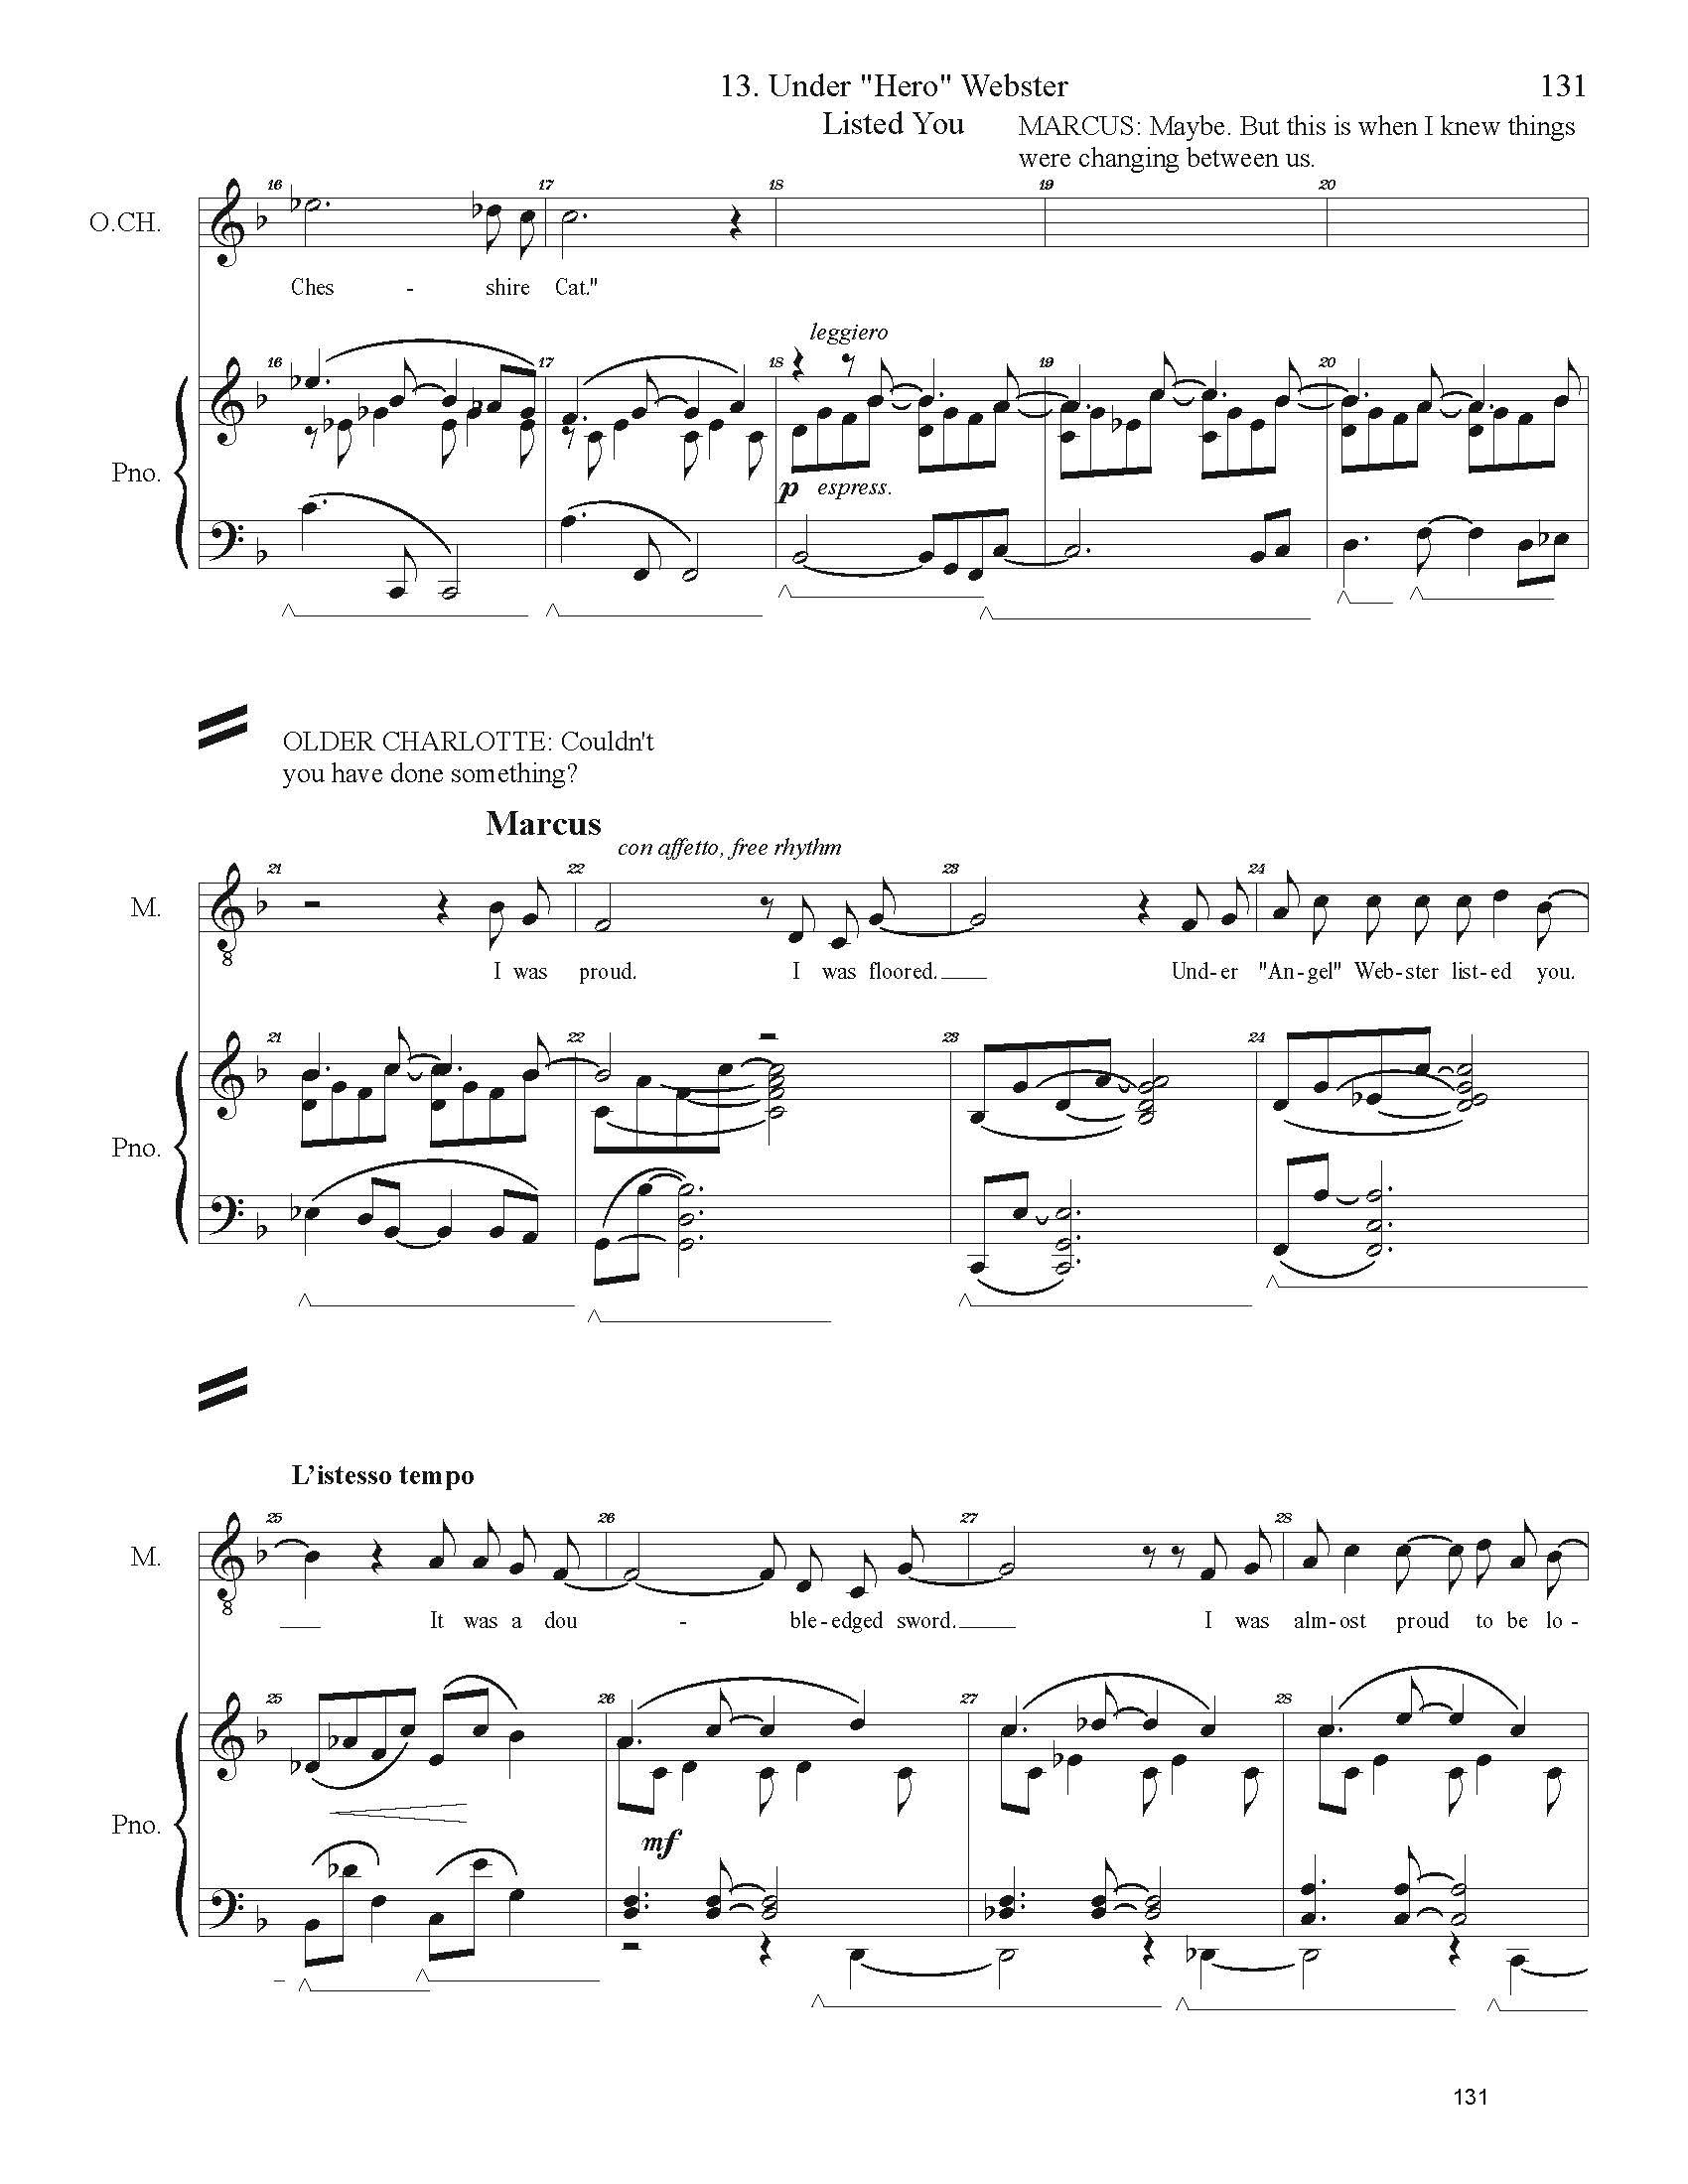 FULL PIANO VOCAL SCORE DRAFT 1 - Score_Page_131.jpg